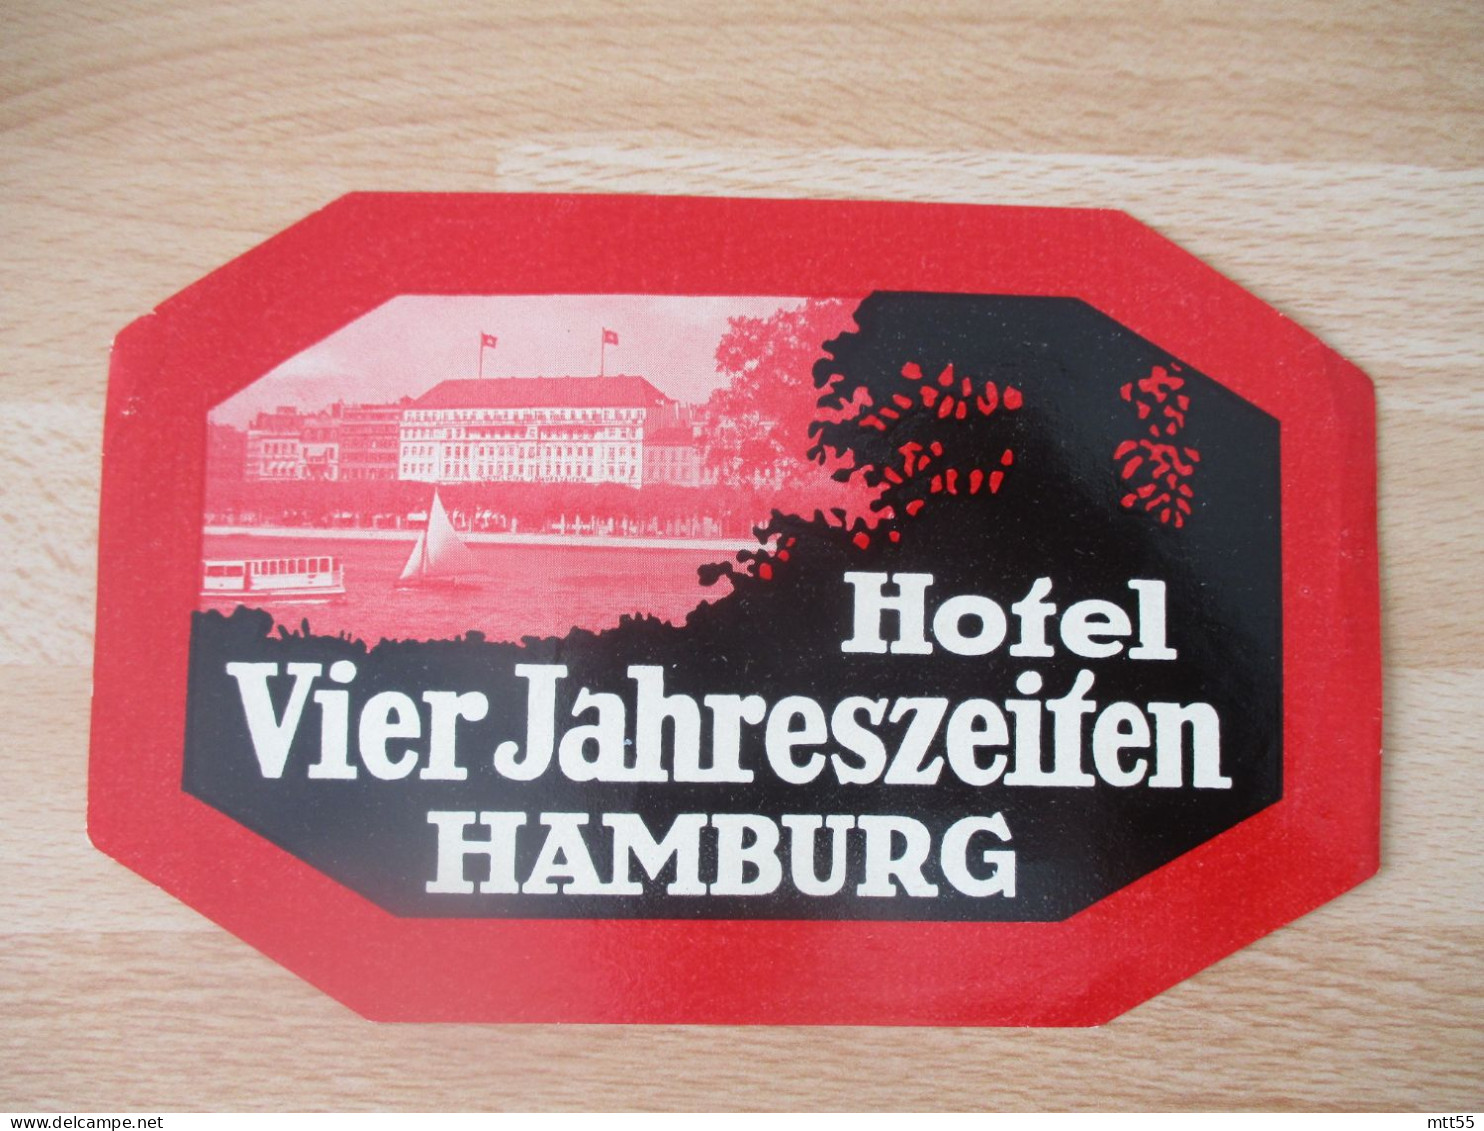 HAMBURG HAMBOURG HOTEL VIER JAHNRESZEIIEN  ETIQUETTE HOTEL - Etiketten Van Hotels